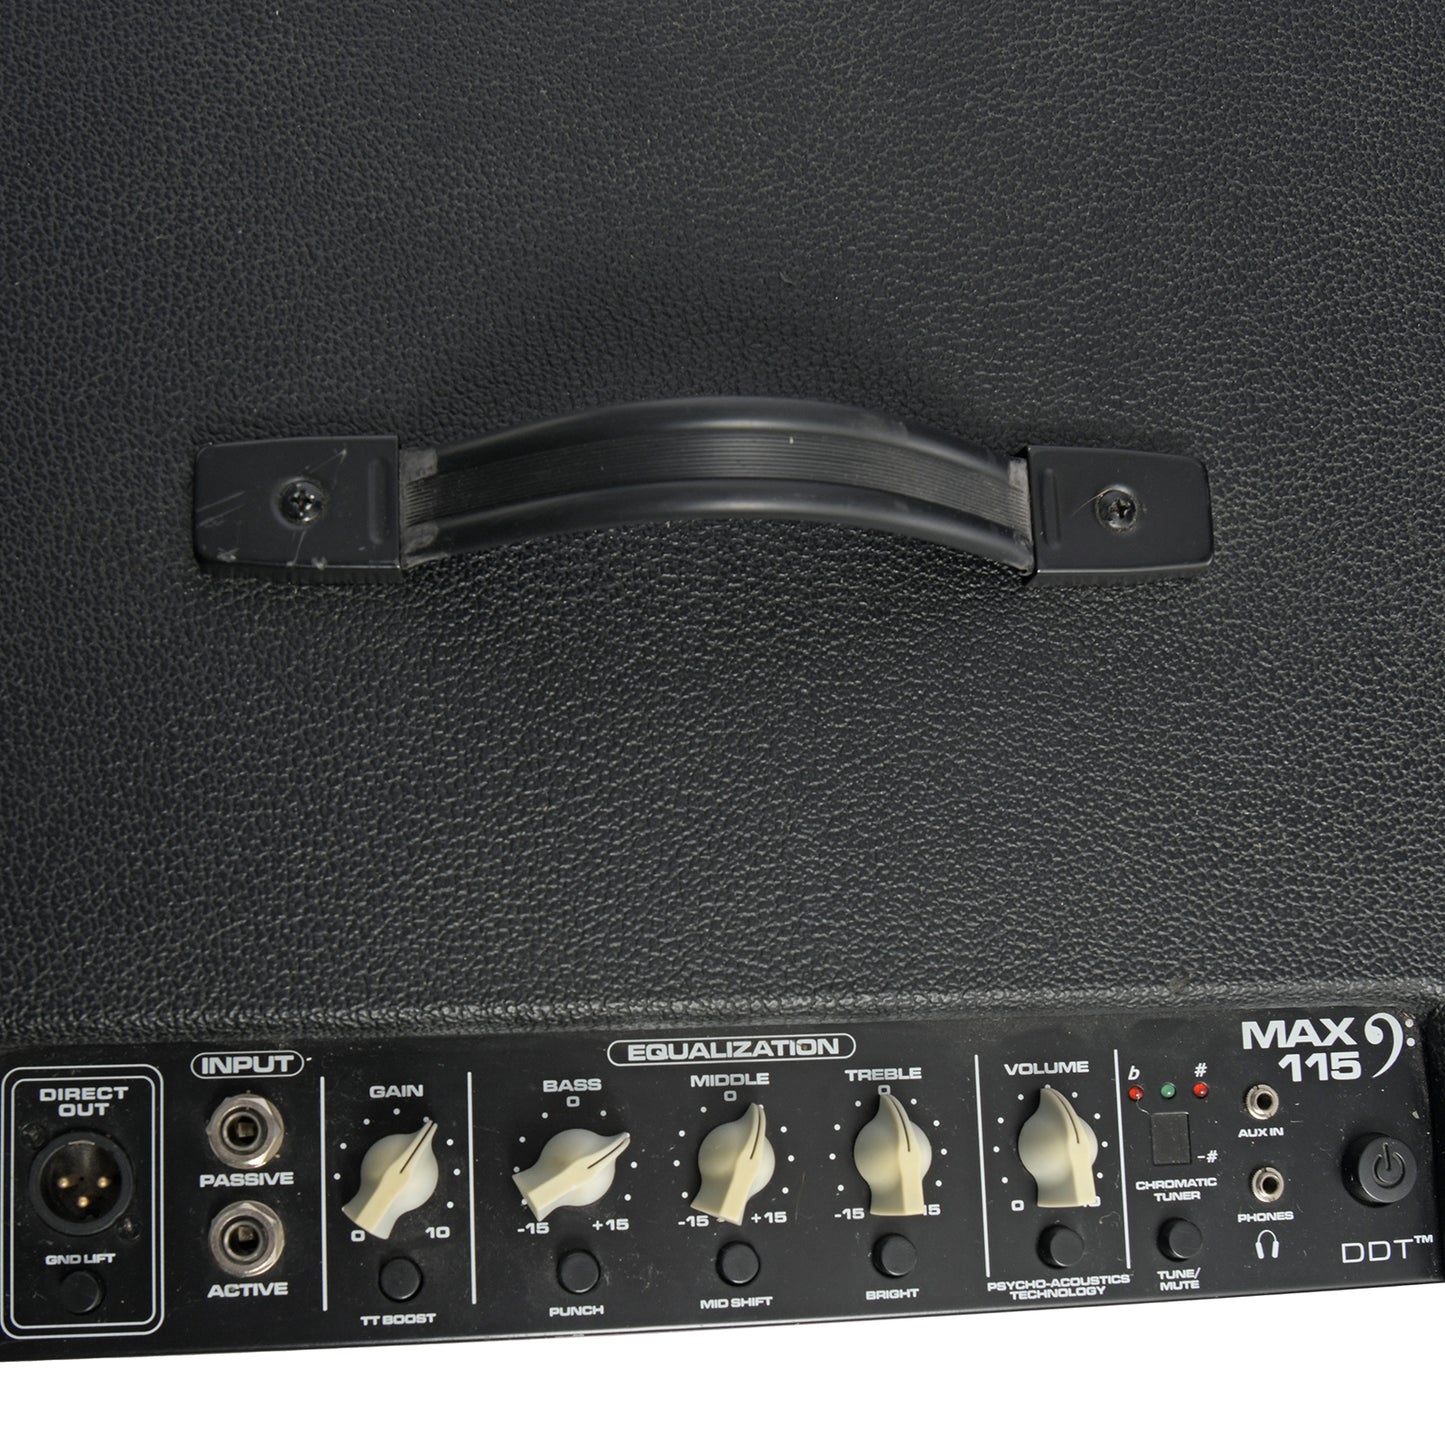 Controls of Peavey Max 115